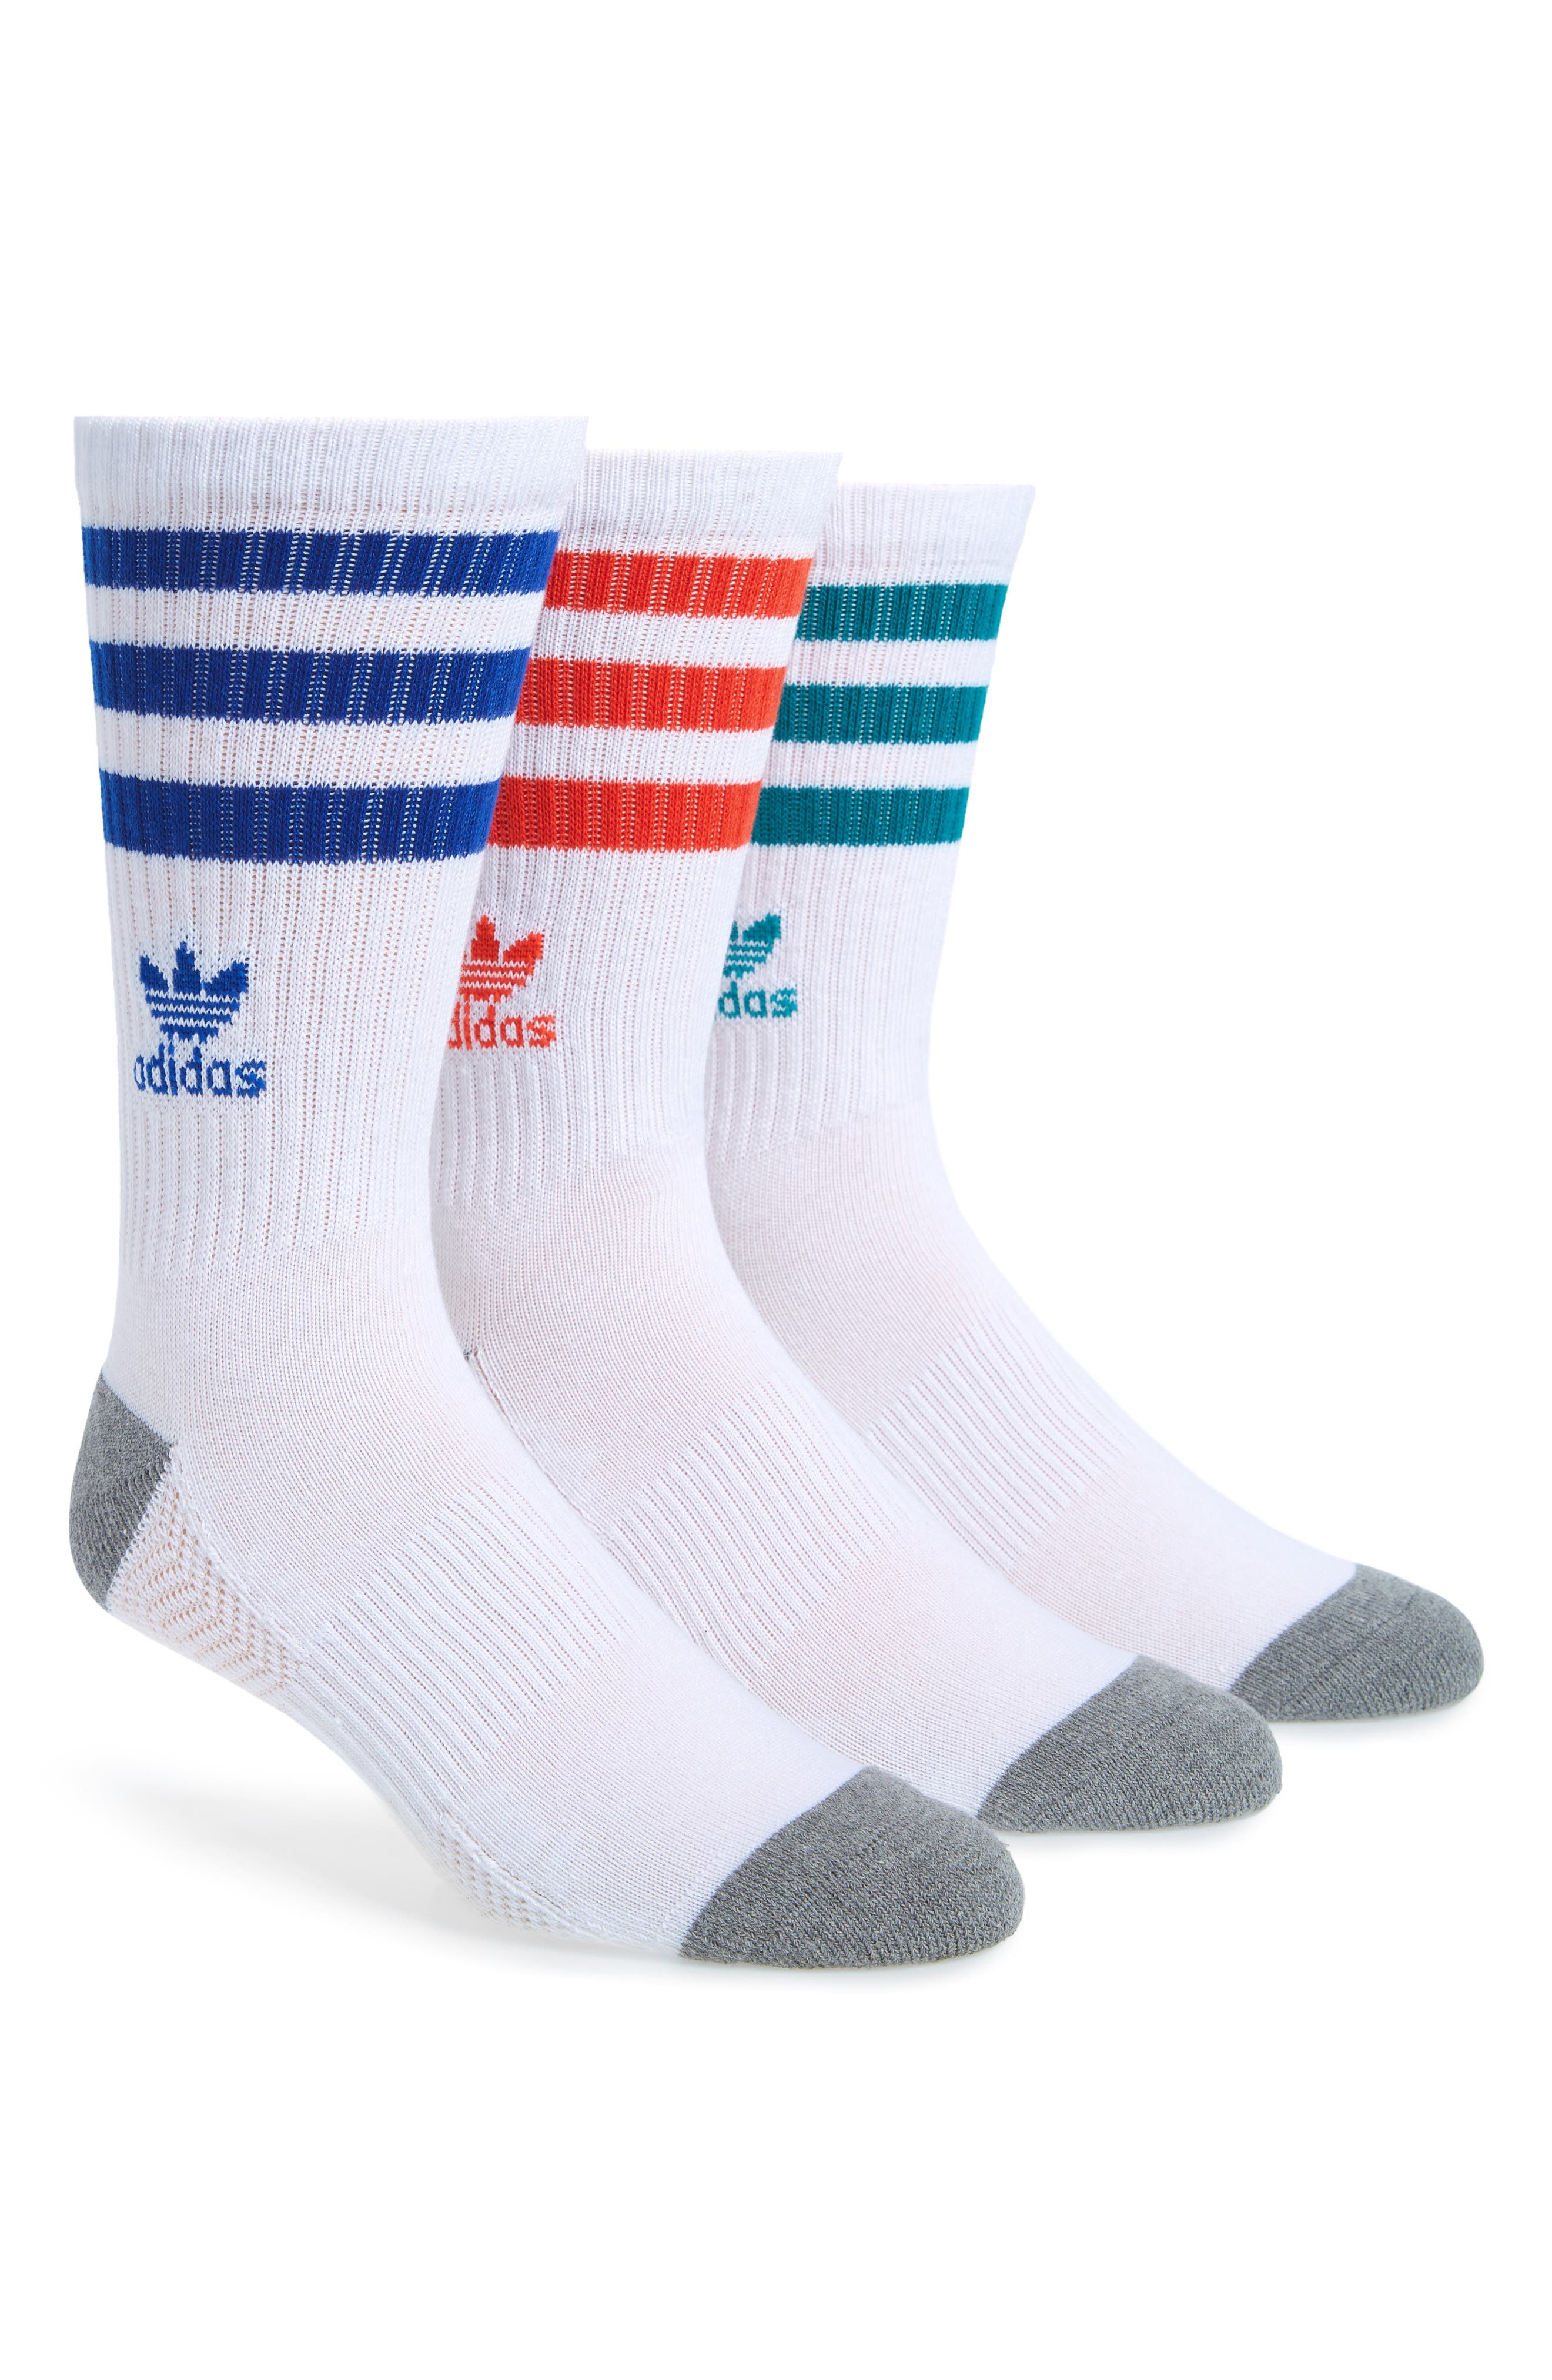 roller crew socks adidas